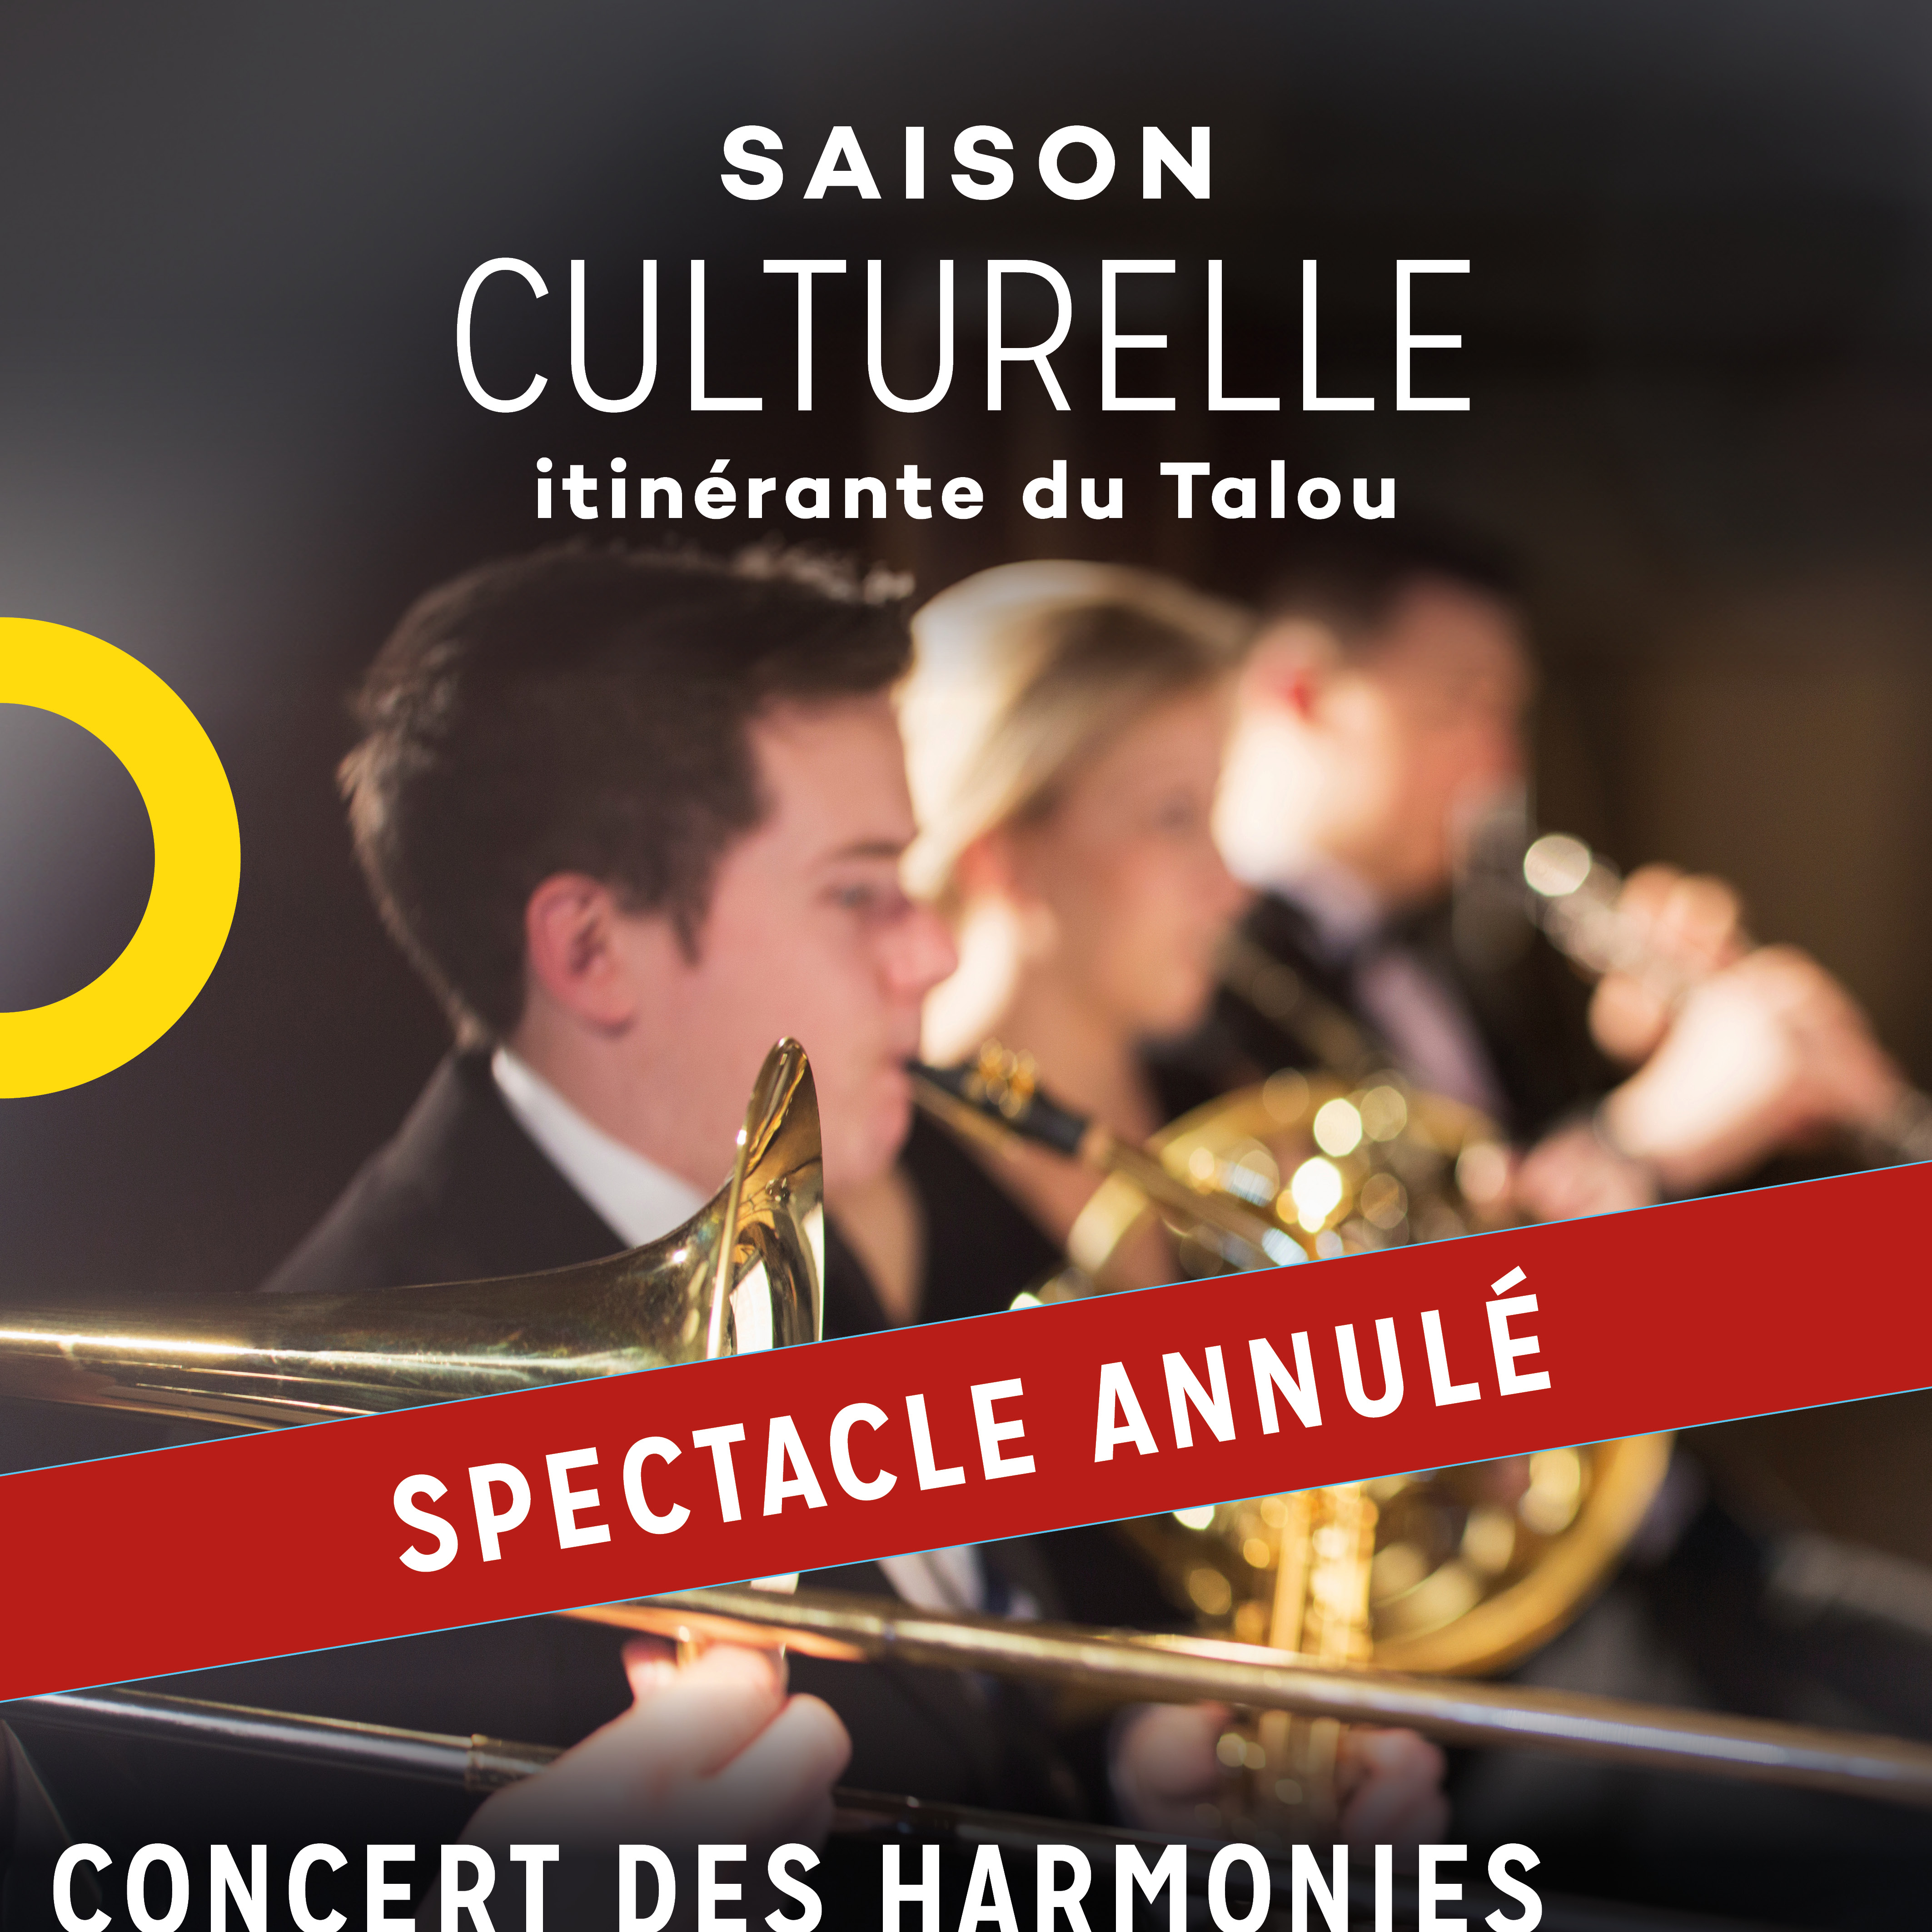 concert_des_harmonies1.jpg